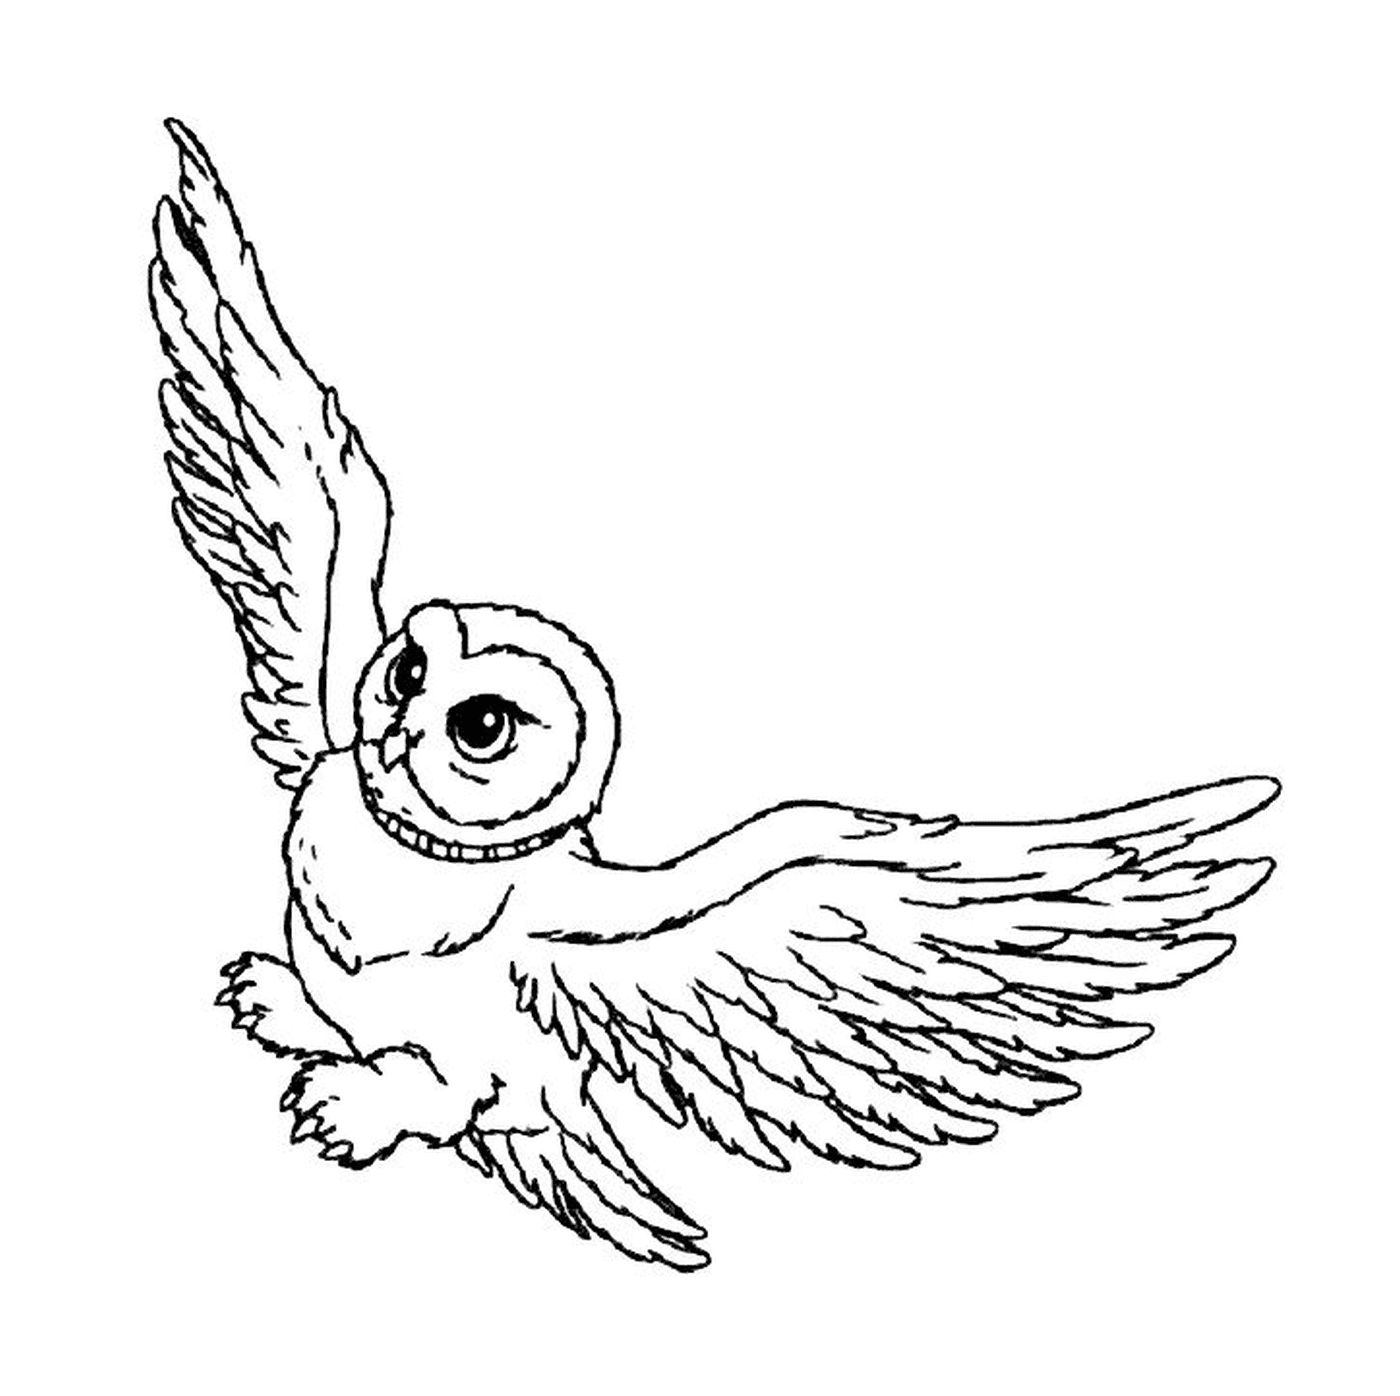  Hedwige vola nel cielo 